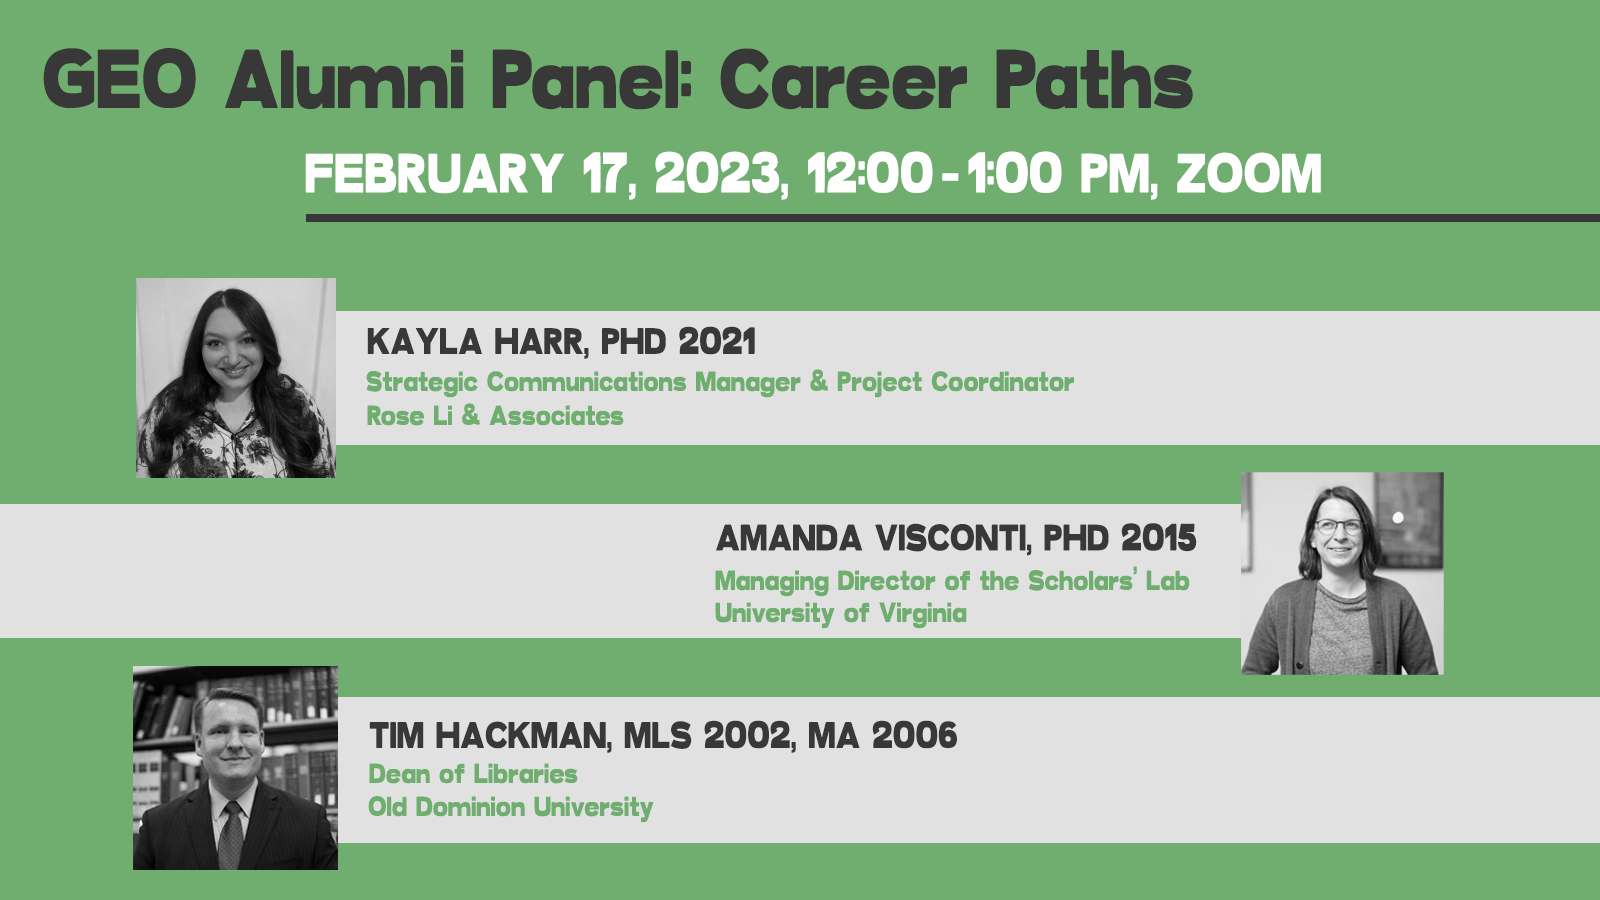 Graphic of GEO Alumni Panel event information